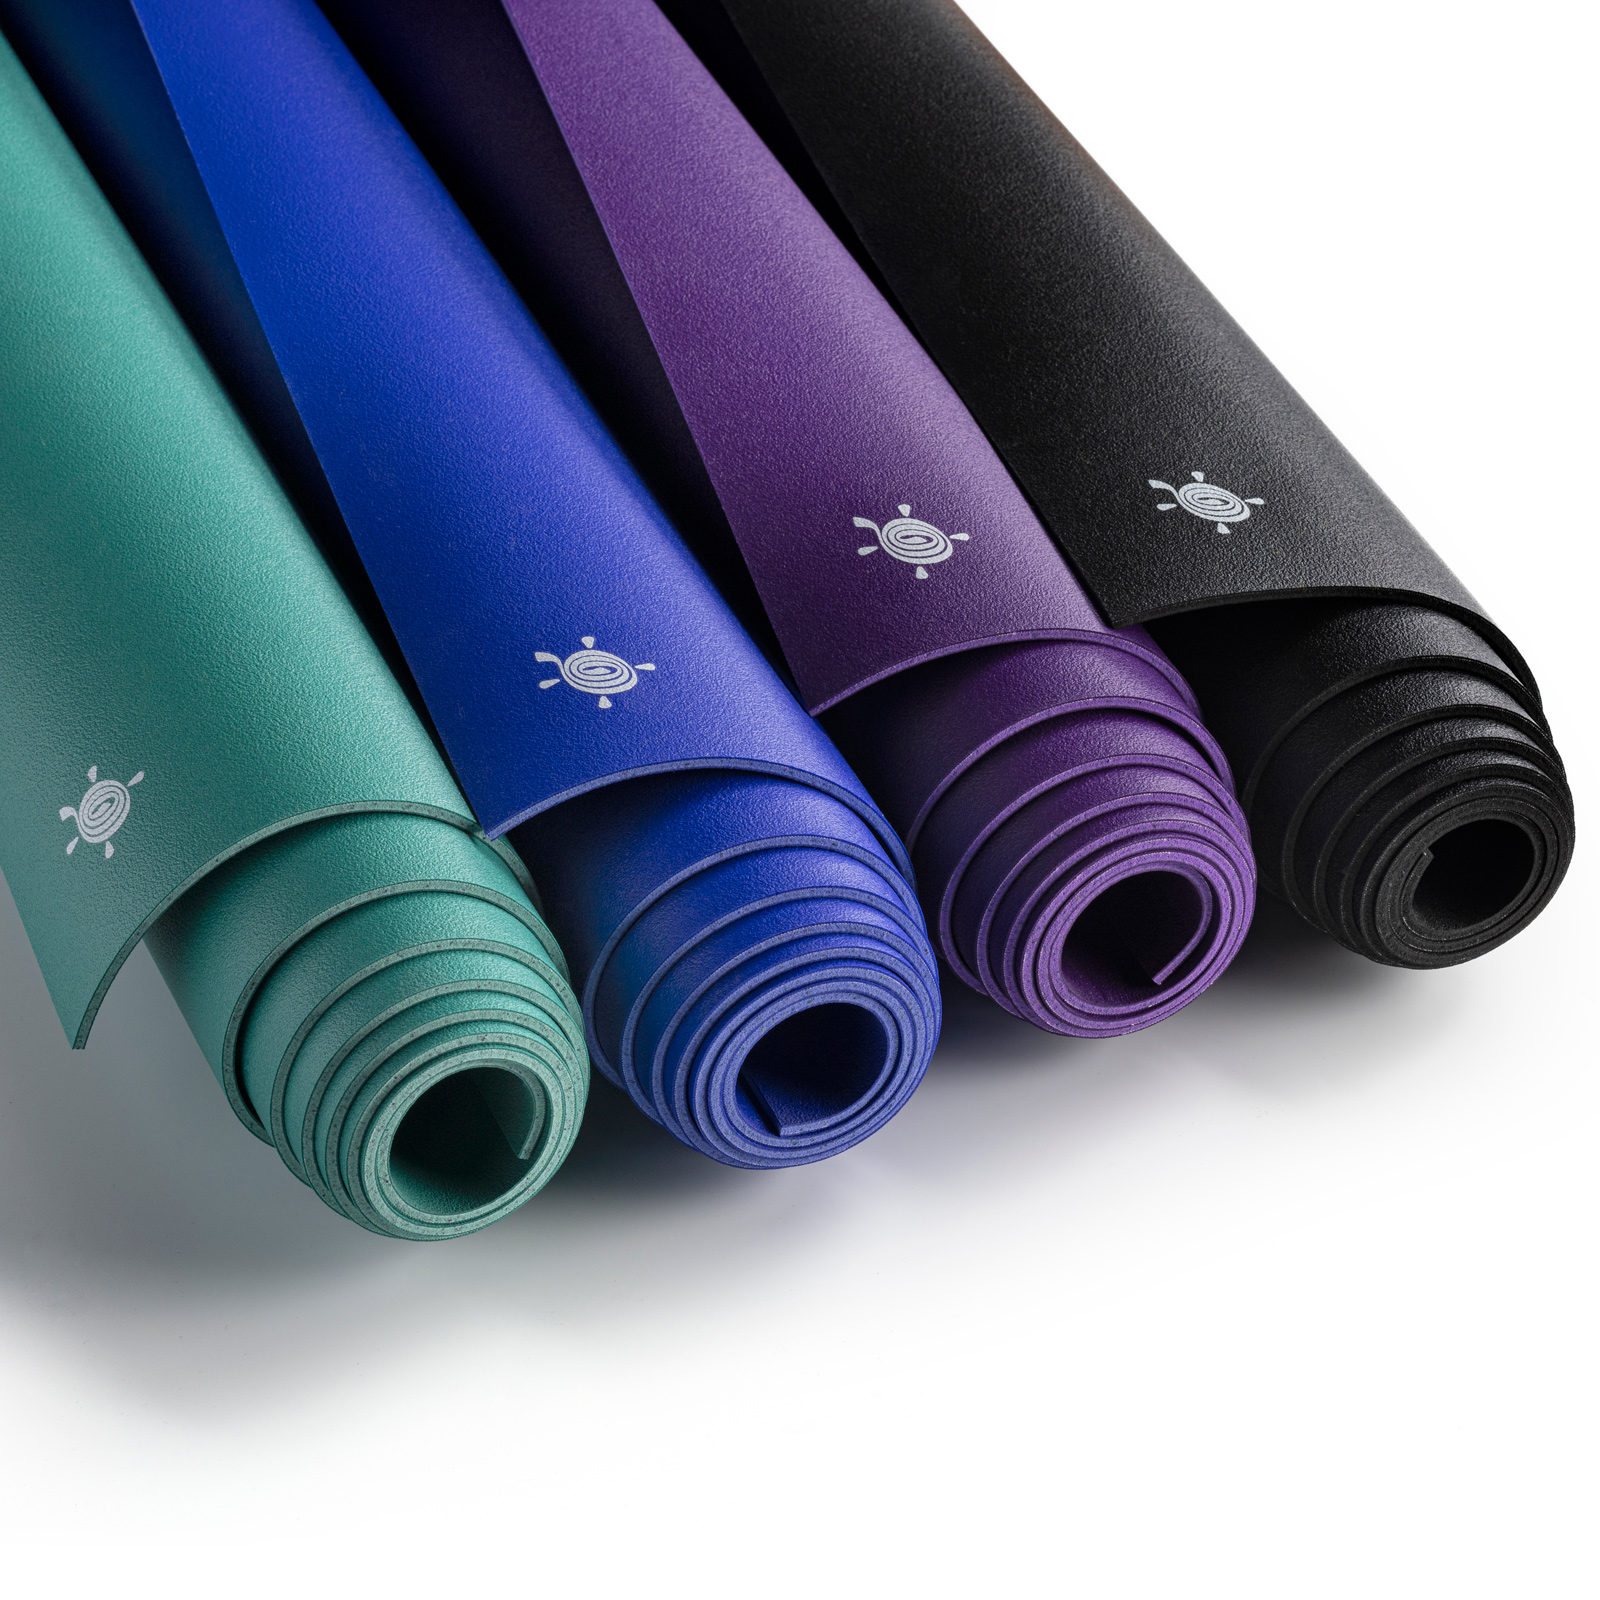 in Lite - Yoga KURMA GECO Yoga Europe mat - made sustainably